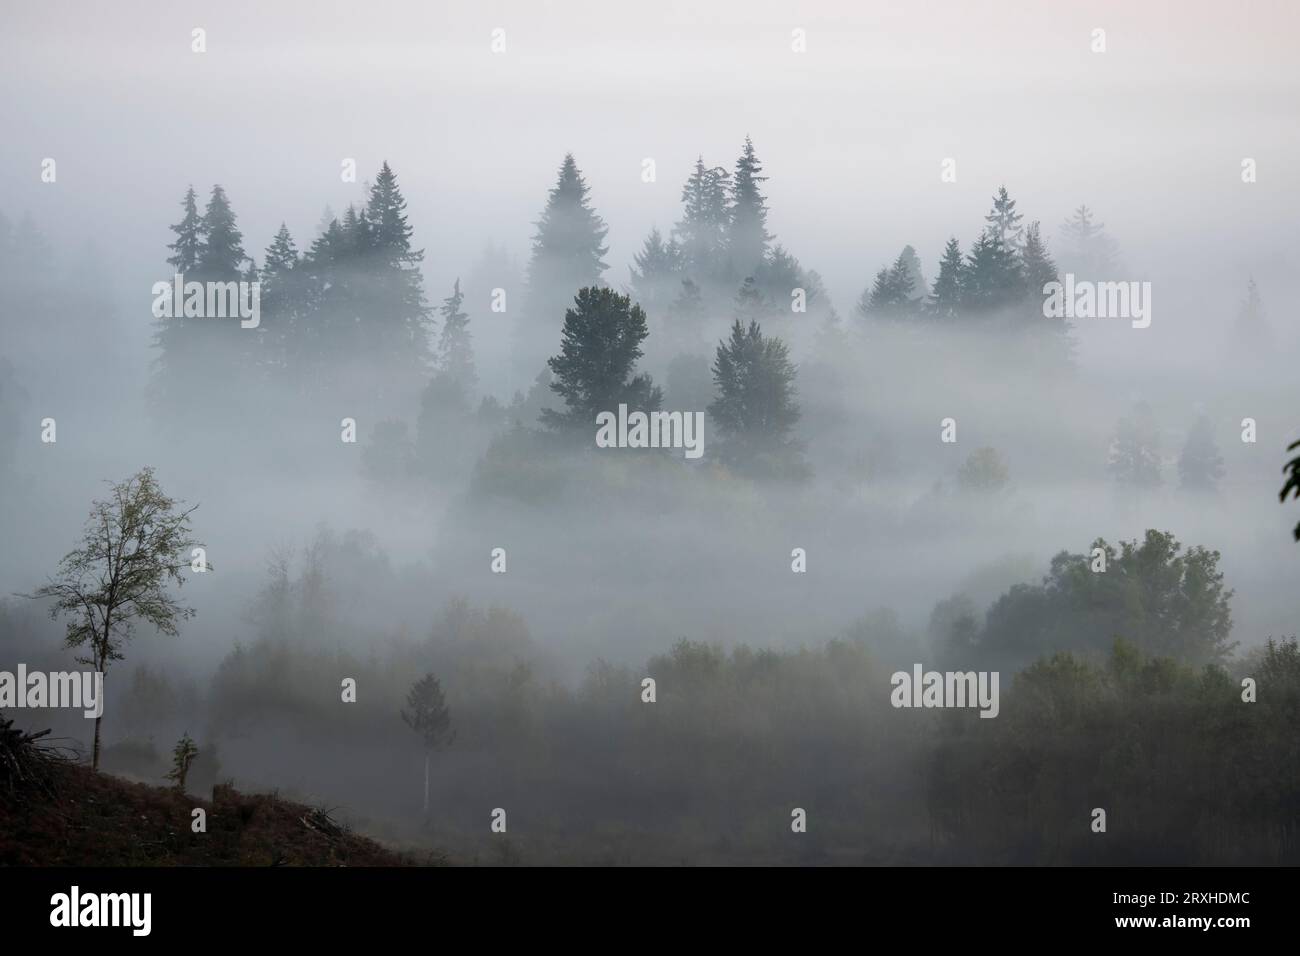 La nebbia mattutina avvolge alberi sempreverdi; Washington, Stati Uniti d'America Foto Stock